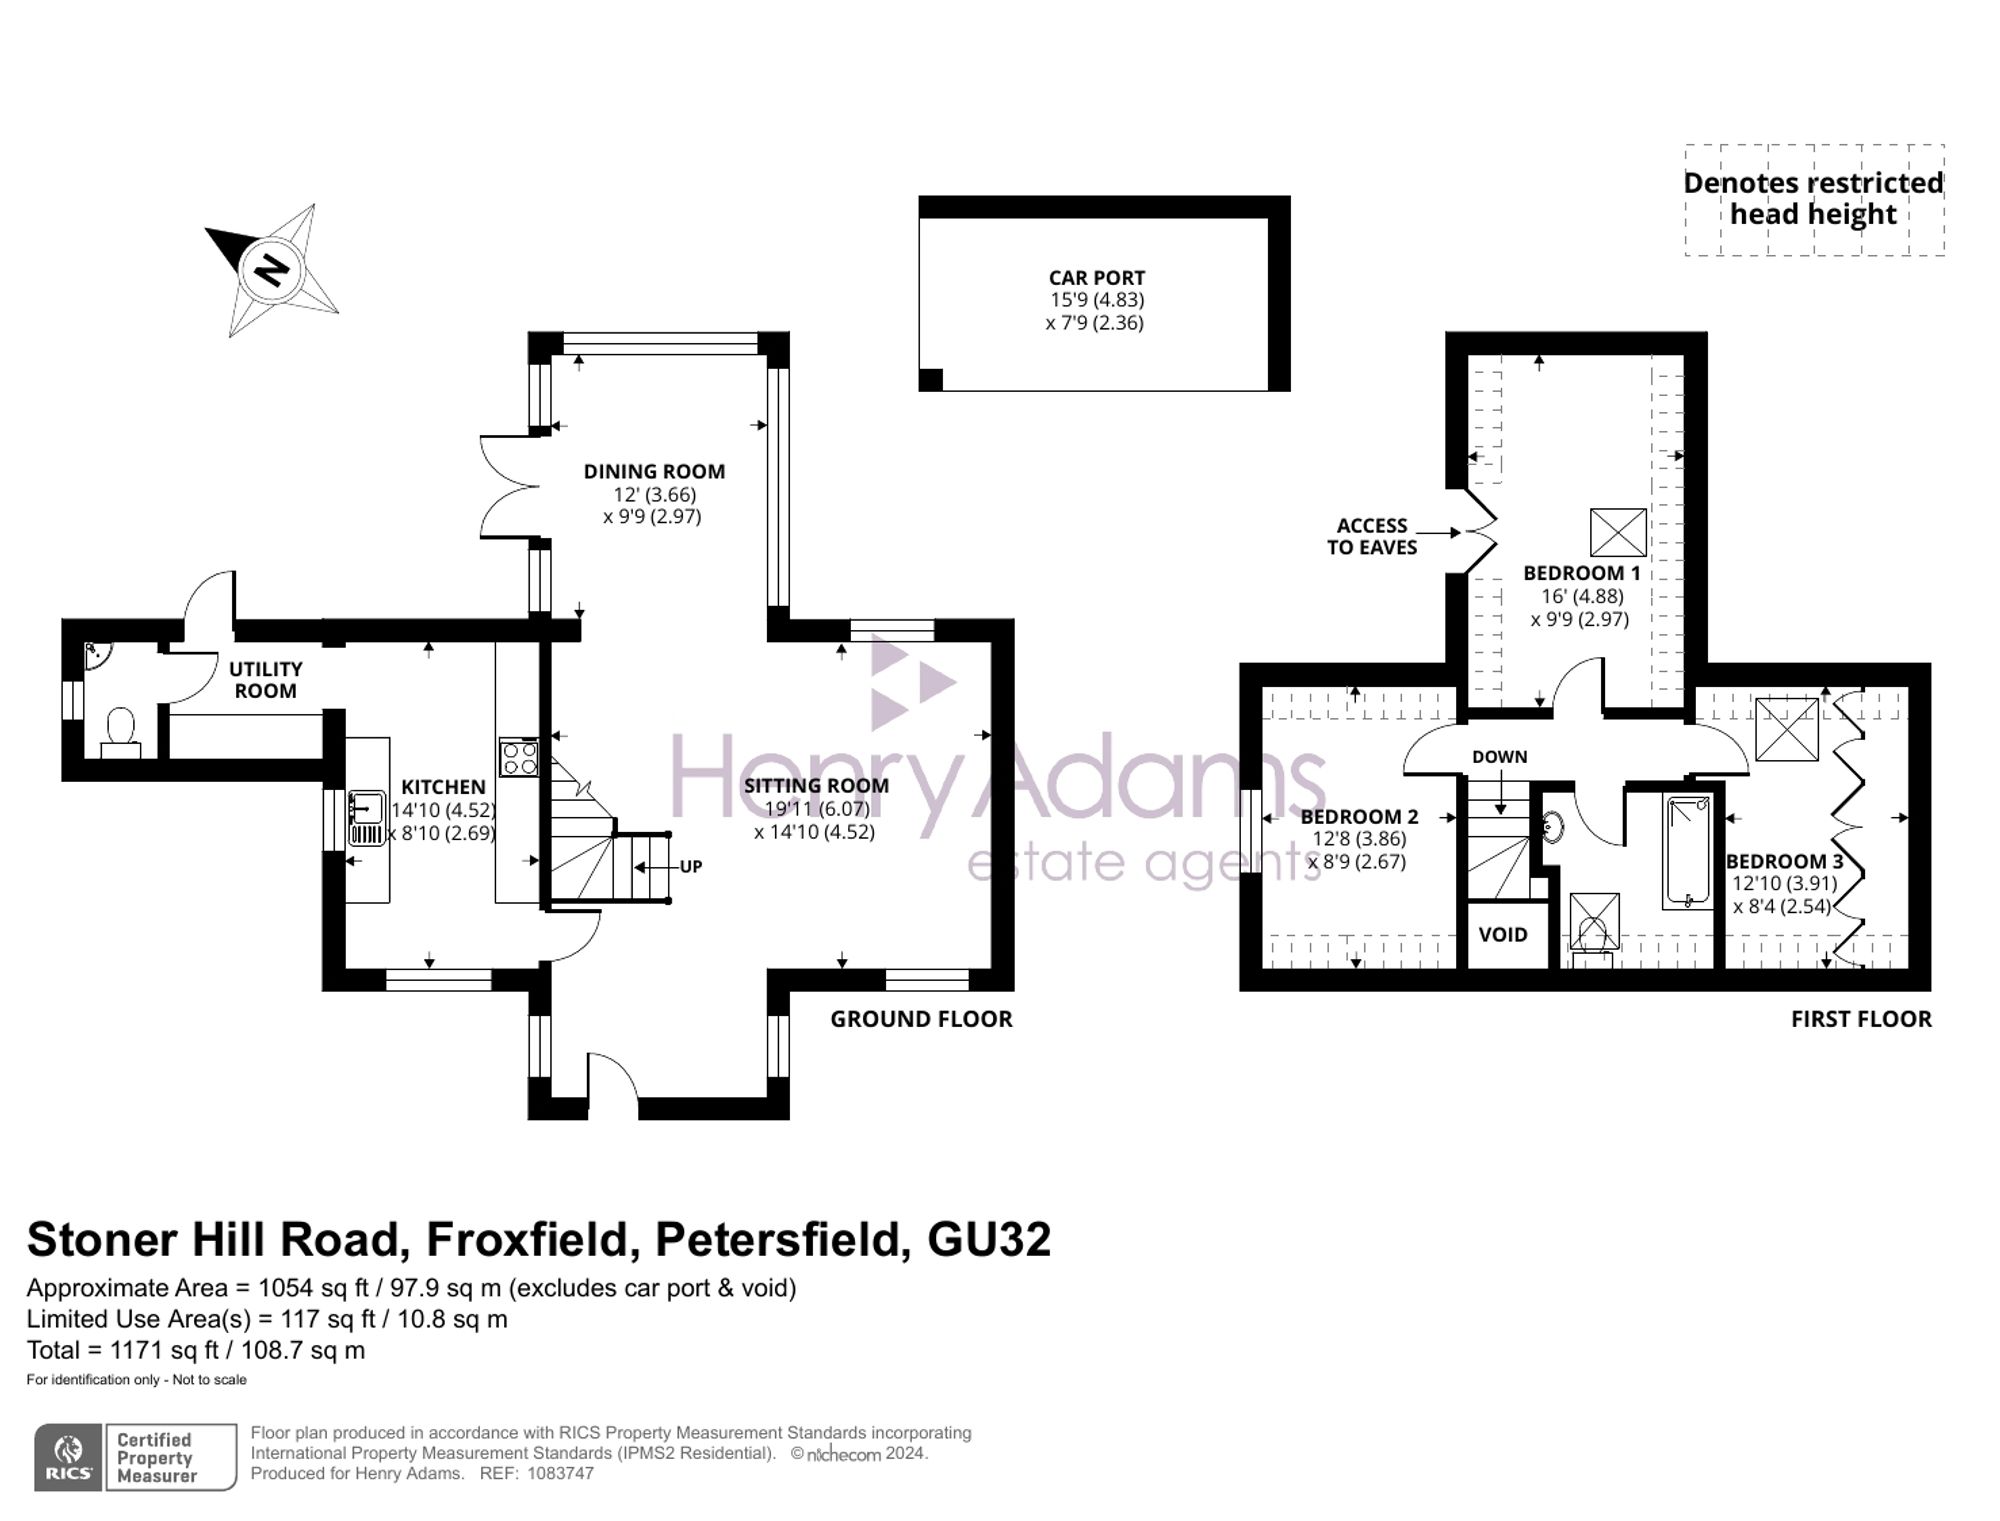 Stoner Hill Road, Froxfield, GU32 floorplans